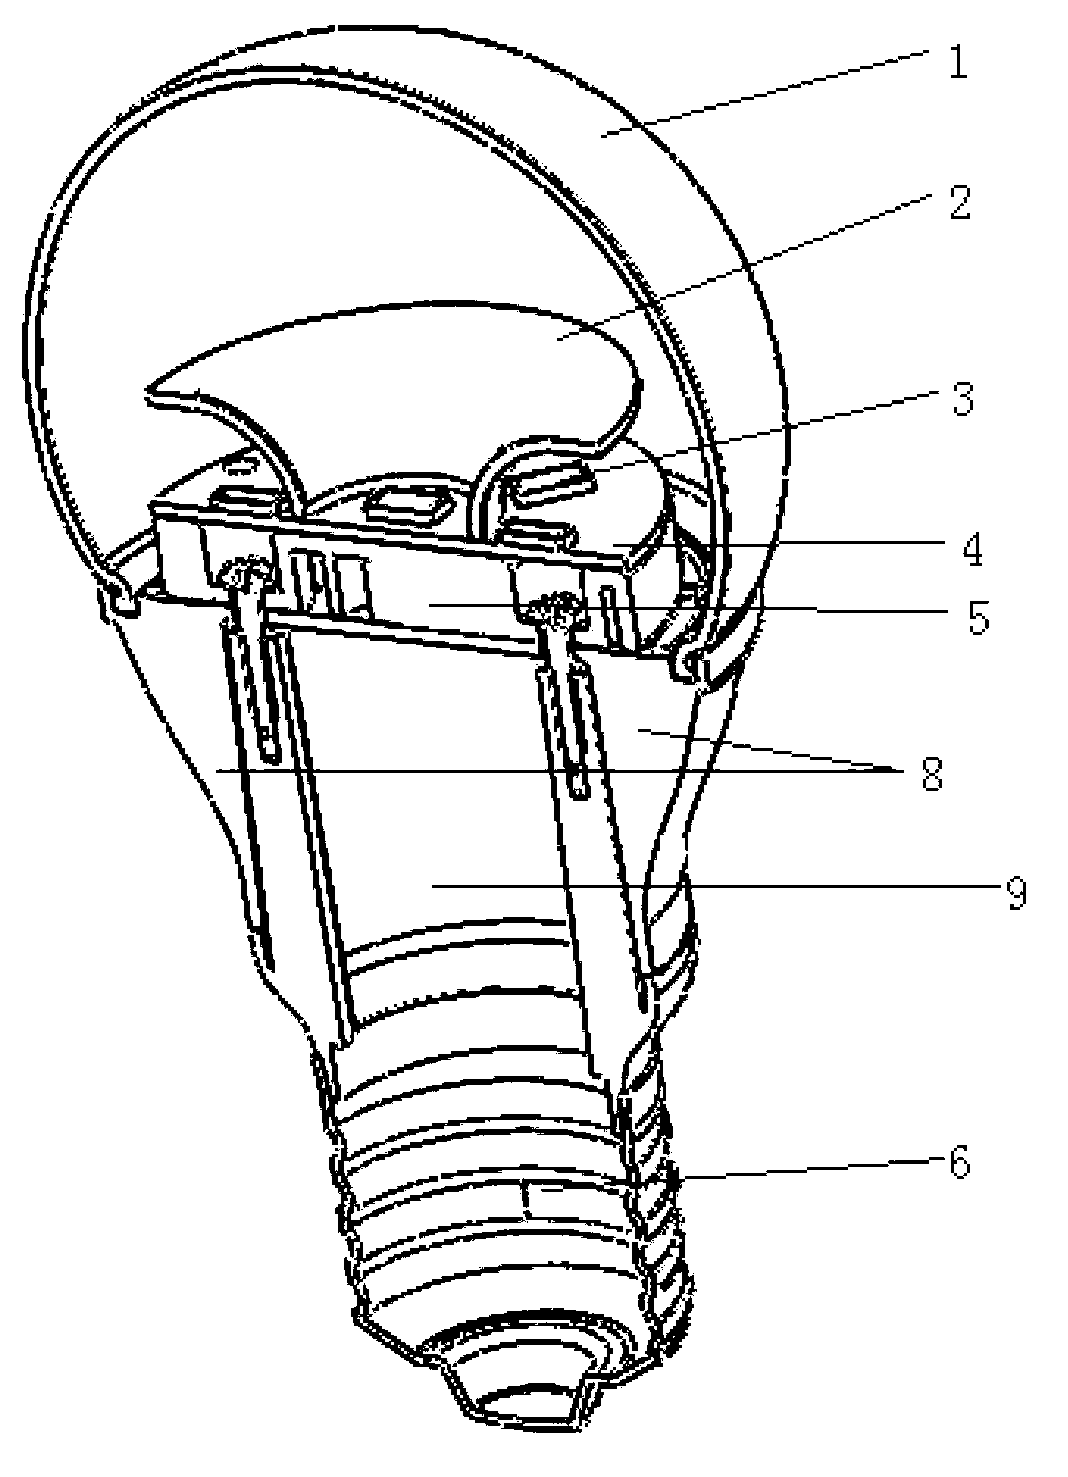 All-light-distribution optical system used for light-emitting diode (LED) ball bulb lamp